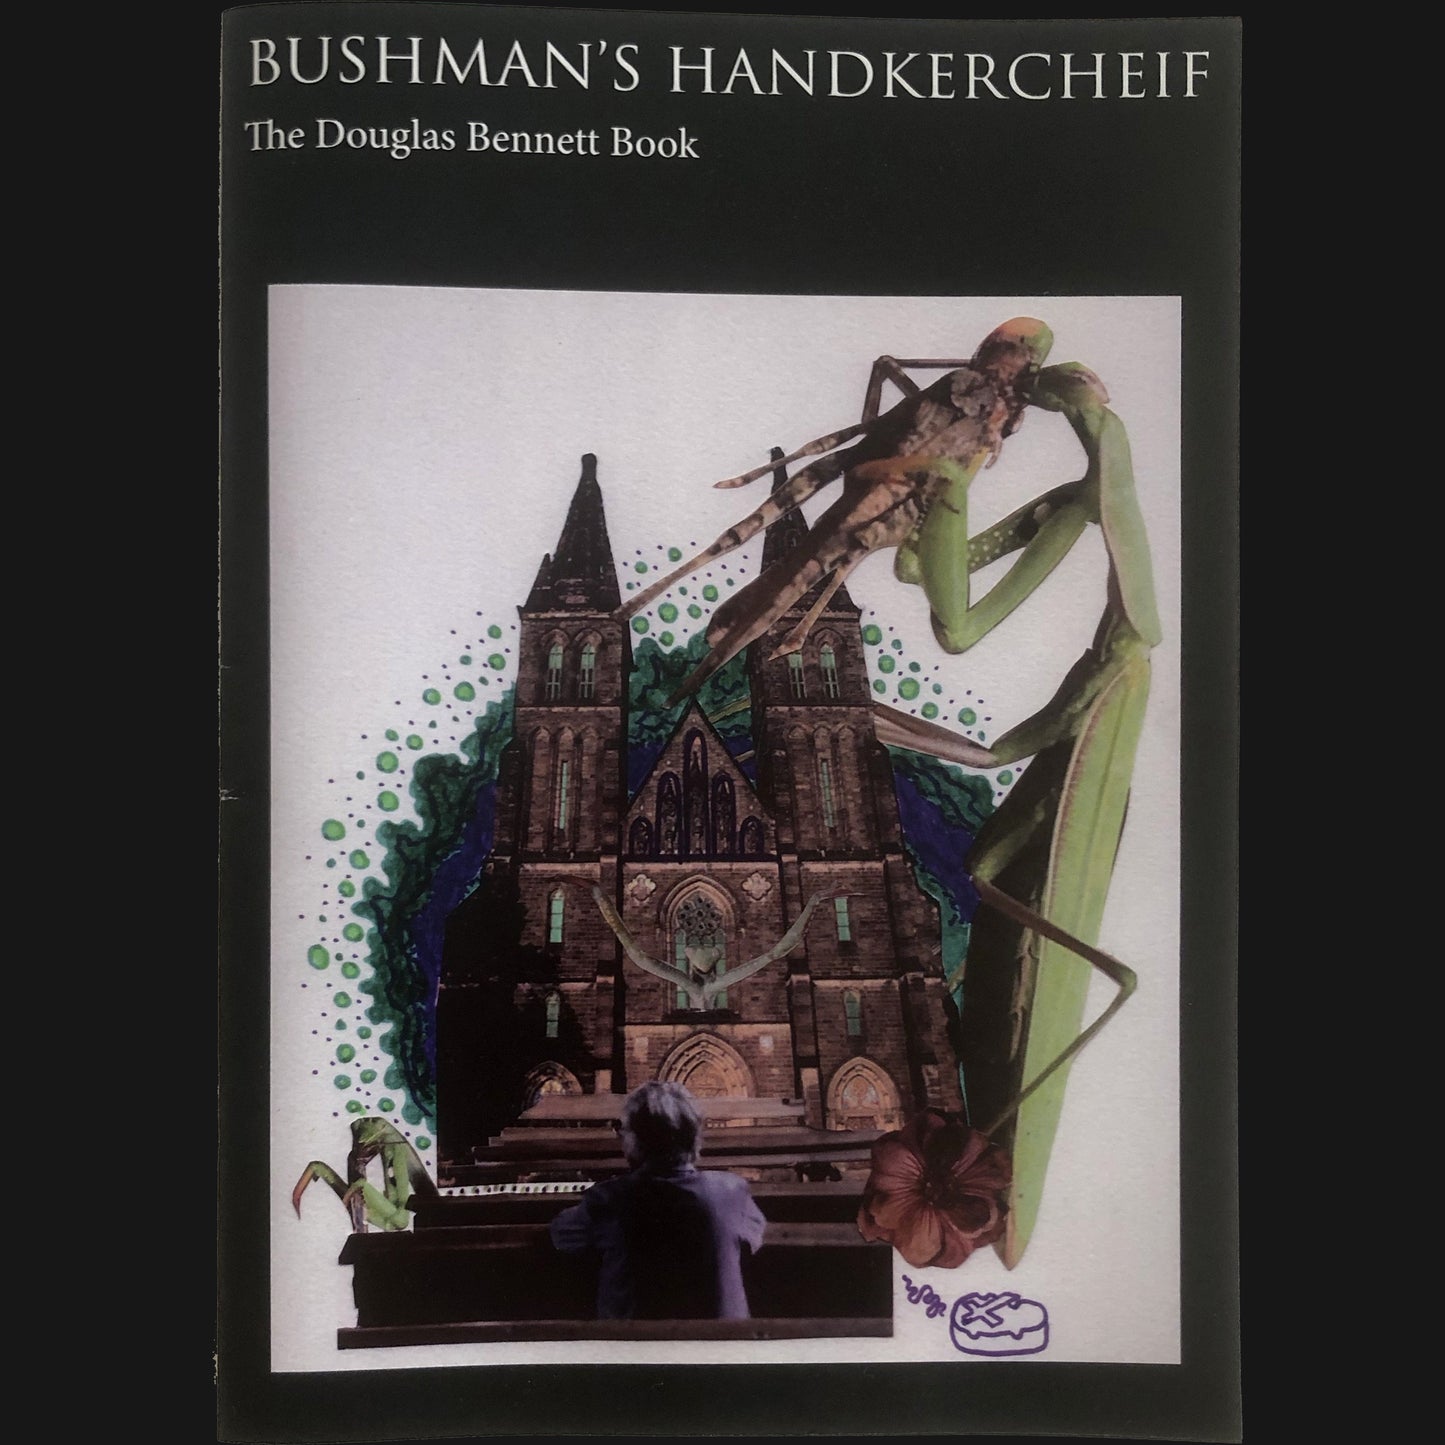 DOUGLAS BENNETT - “BUSHMAN’S HANDKERCHEIF" BOOK